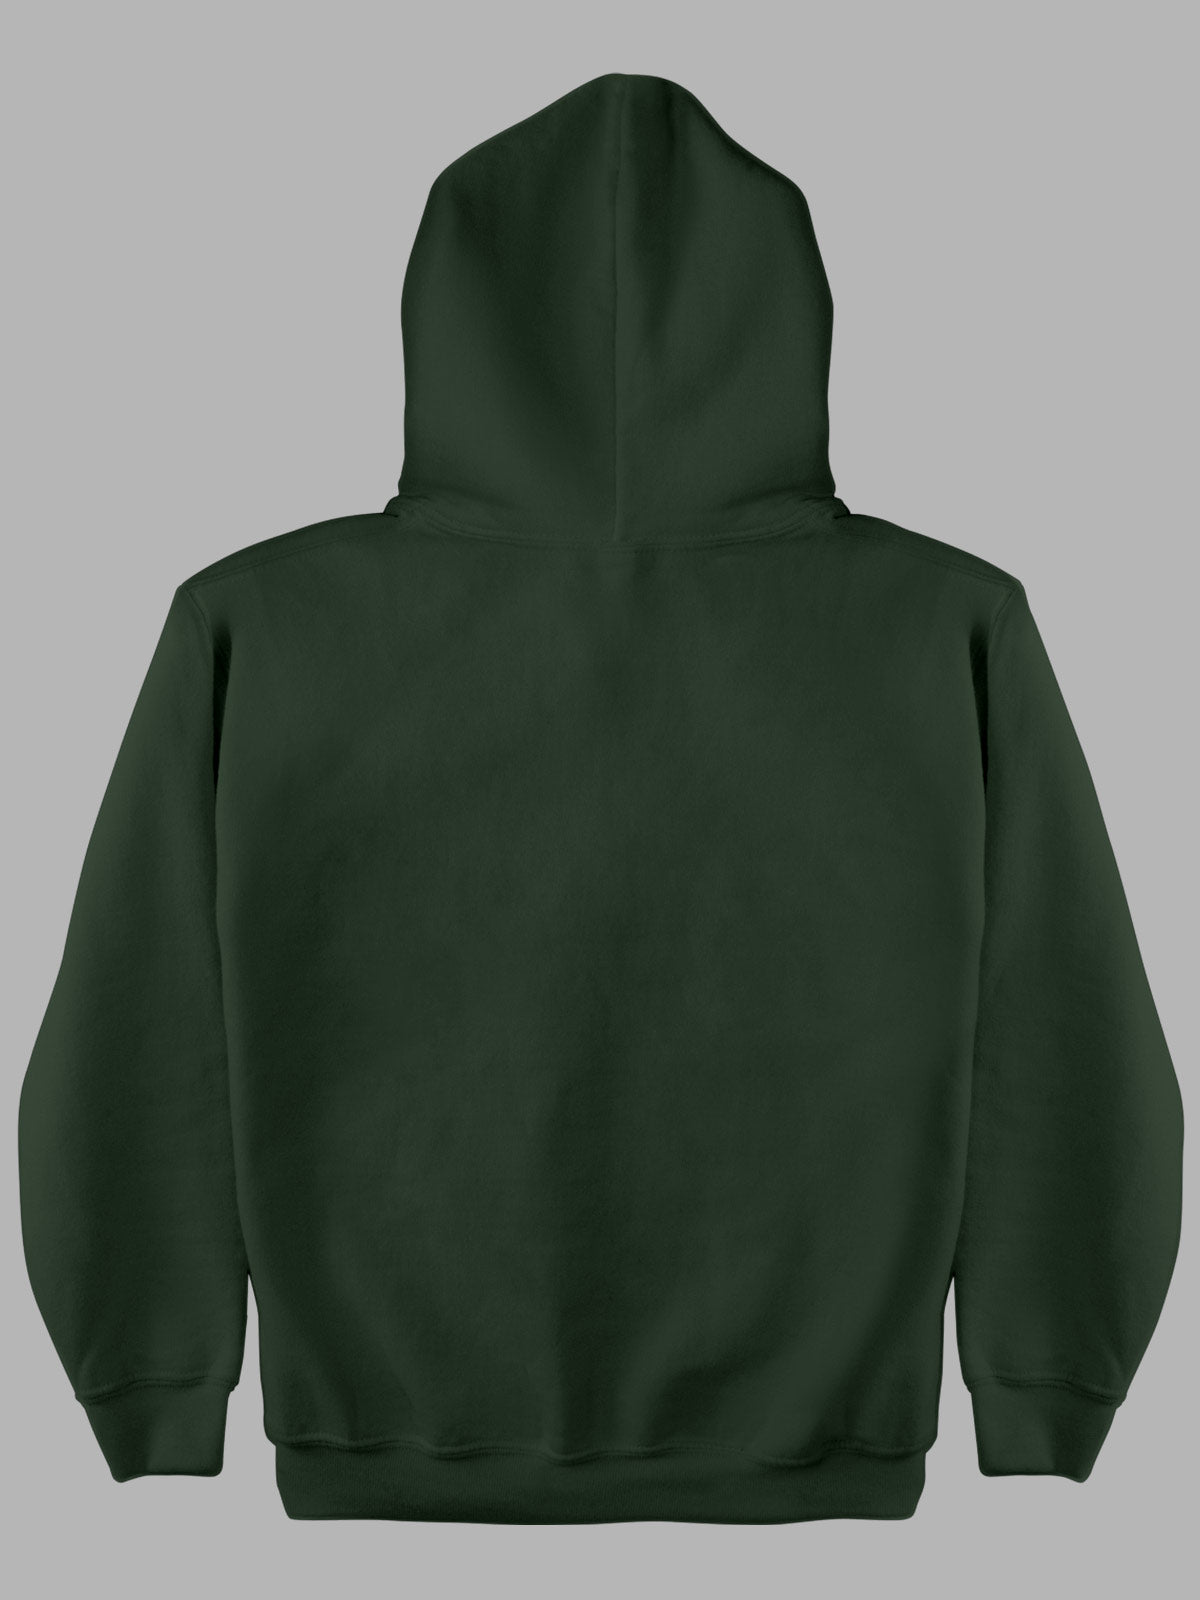 Military Green Plain Cotton Hoodie for Men & Women